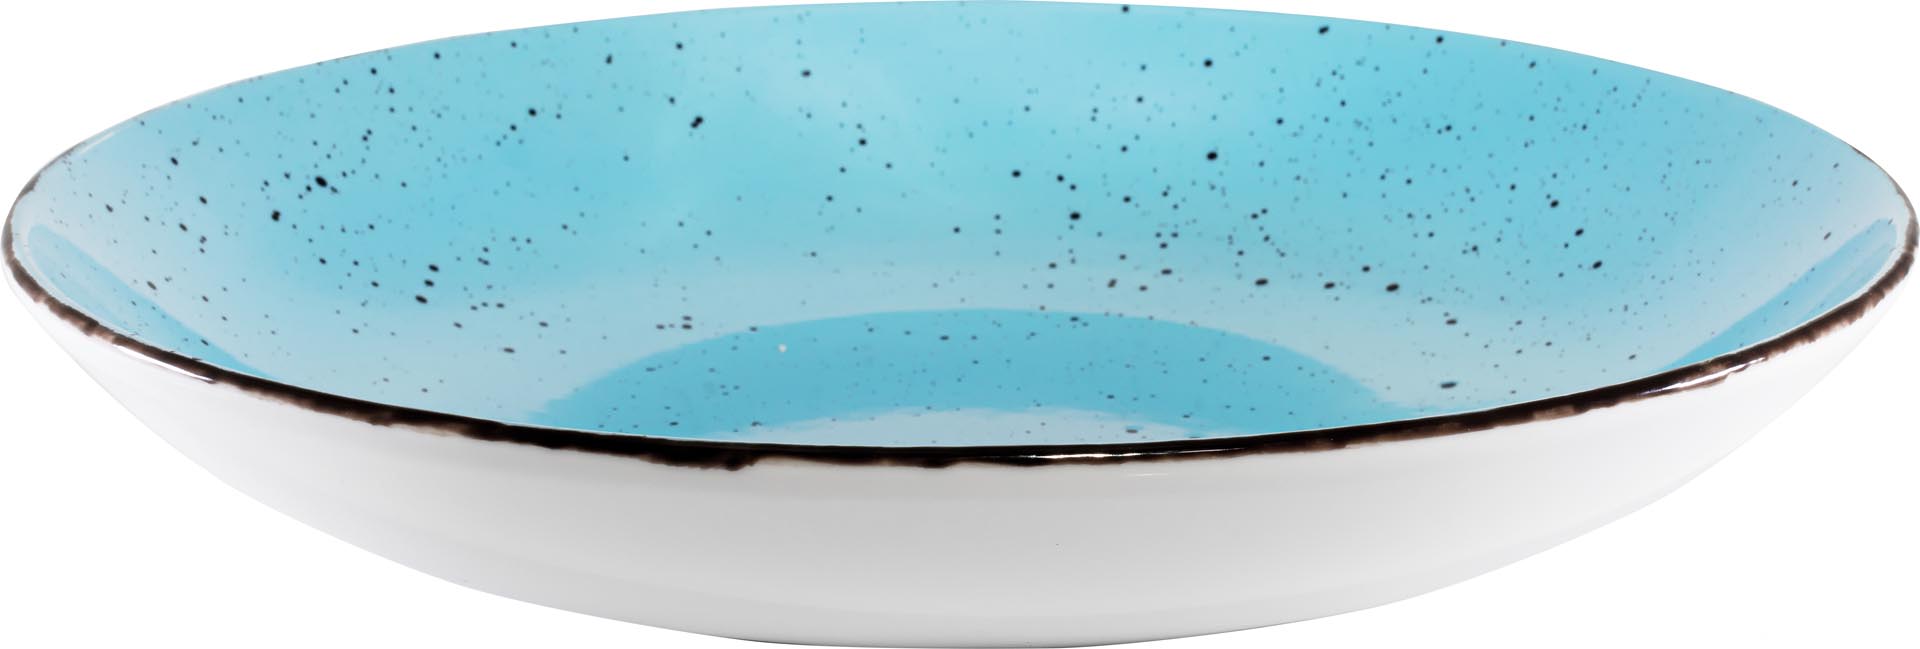 Porzellanserie "Granja" aqua Teller tief Coup-Form, 26 cm